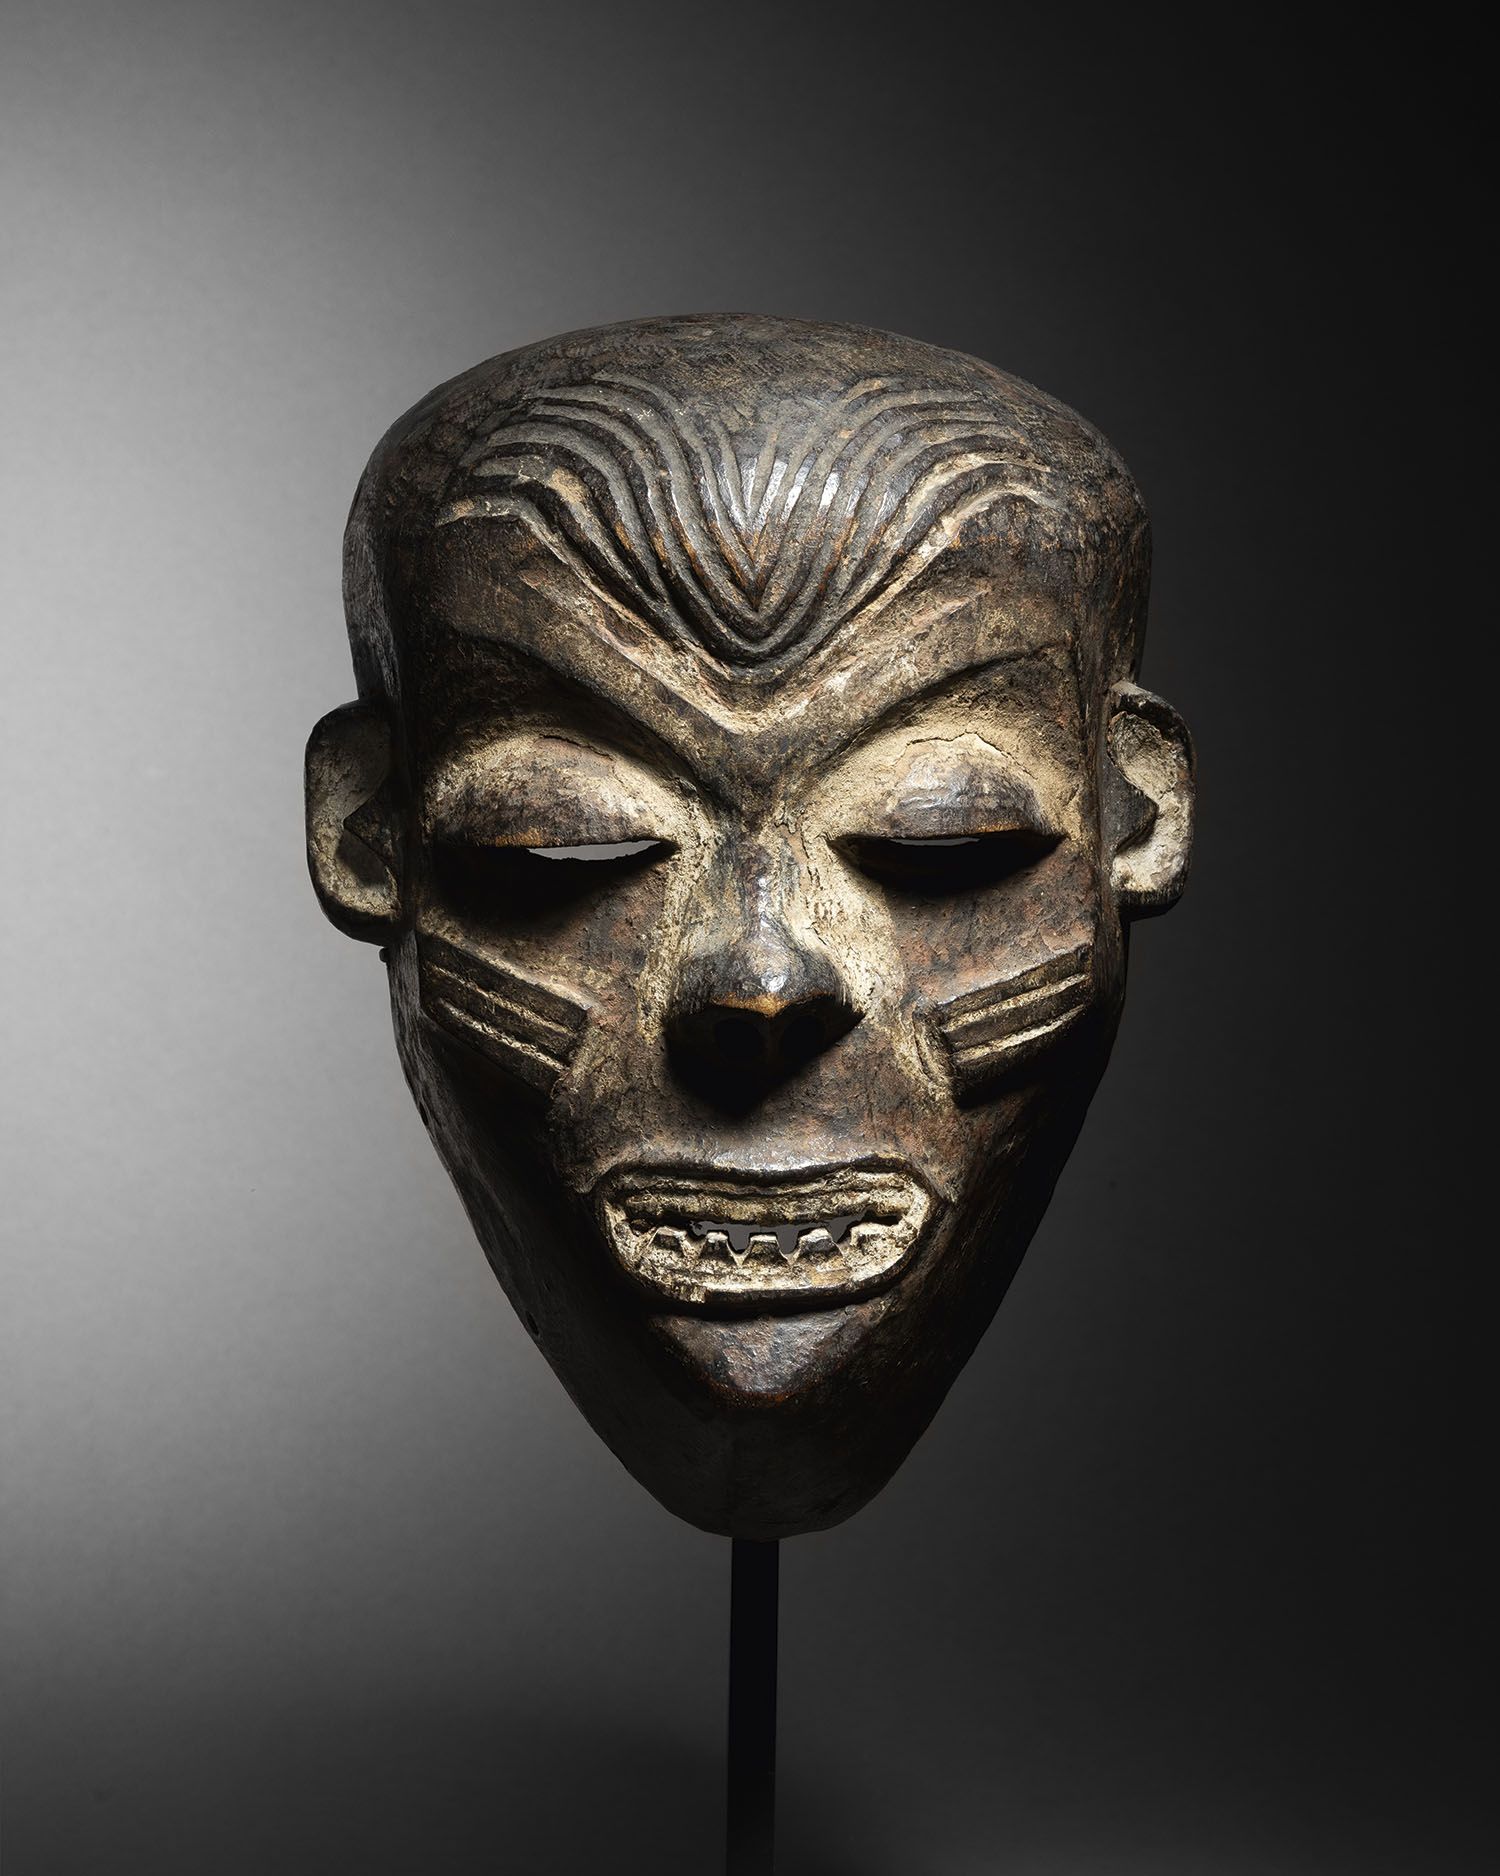 Null 潘德面具，刚果民主共和国
木头，天然颜料
高24厘米
潘德面具，刚果民主共和国
高9 7/16英寸
引人注目的潘德面具，显示出一张憔悴的脸，宽大的嘴里&hellip;